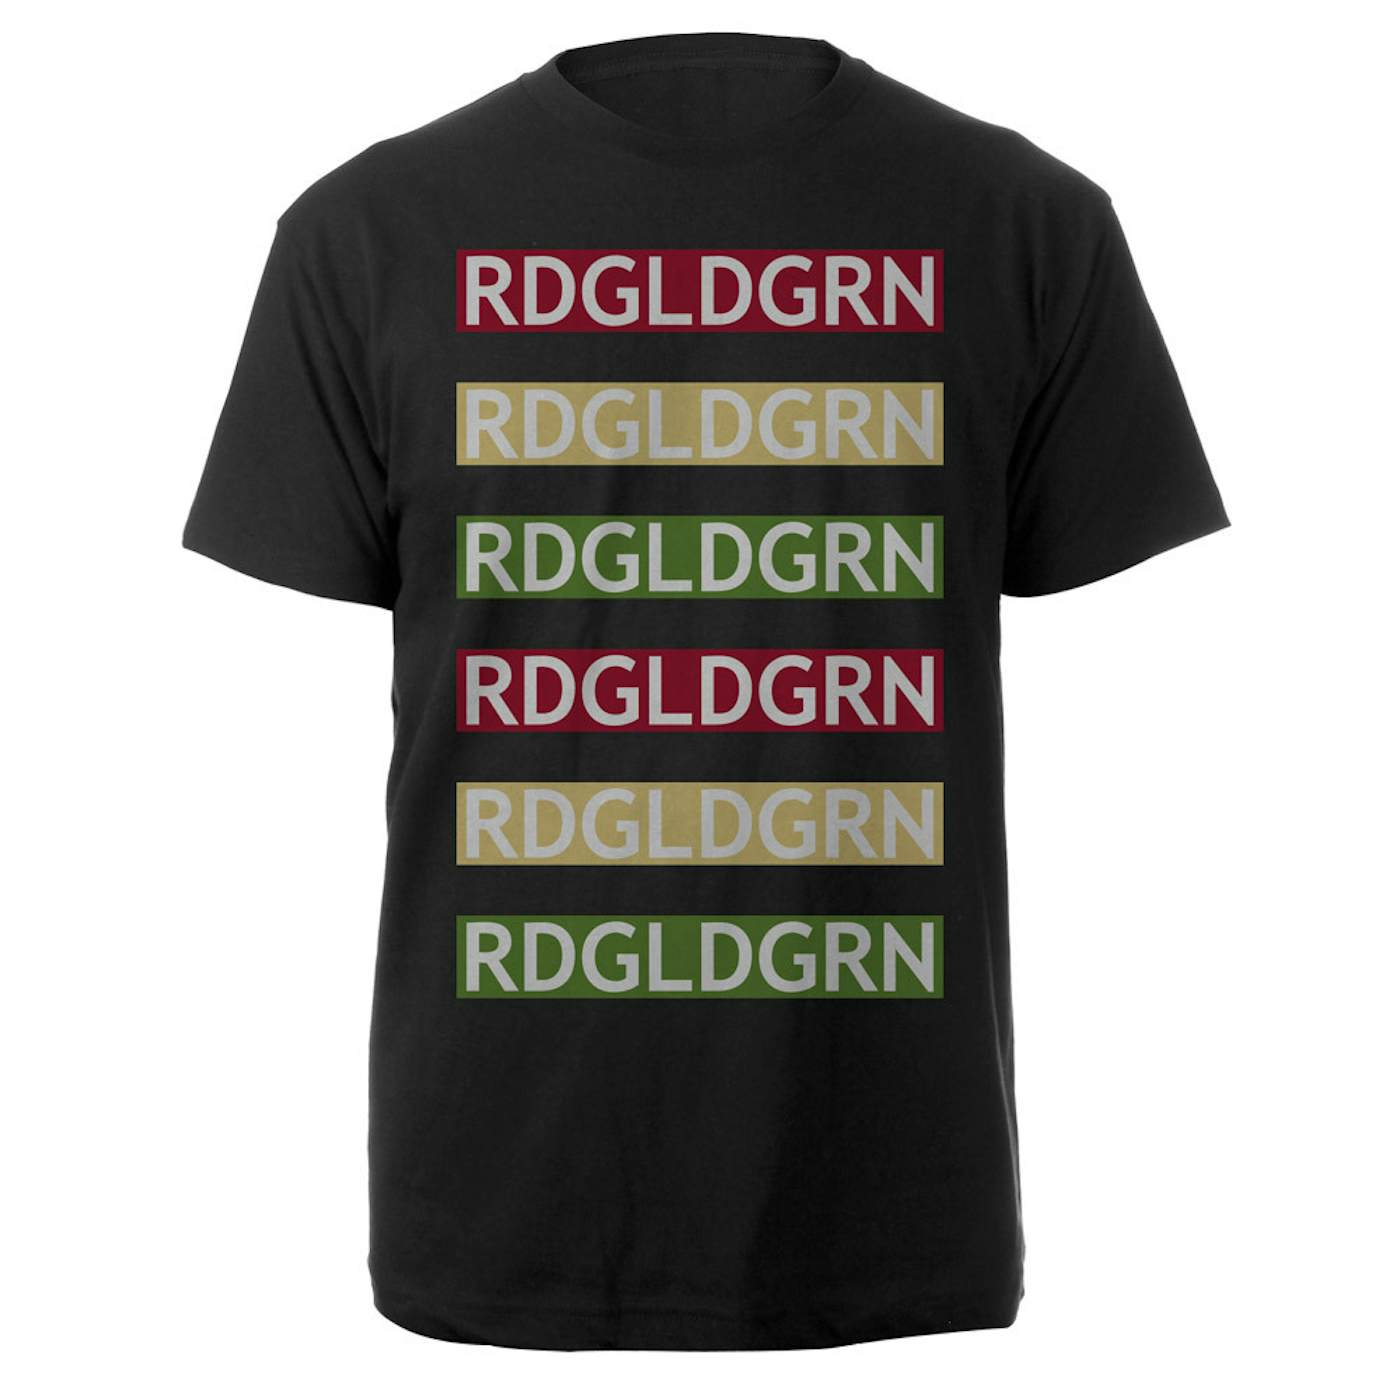 RDGLDGRN Black 6 Stacked Logos Tee